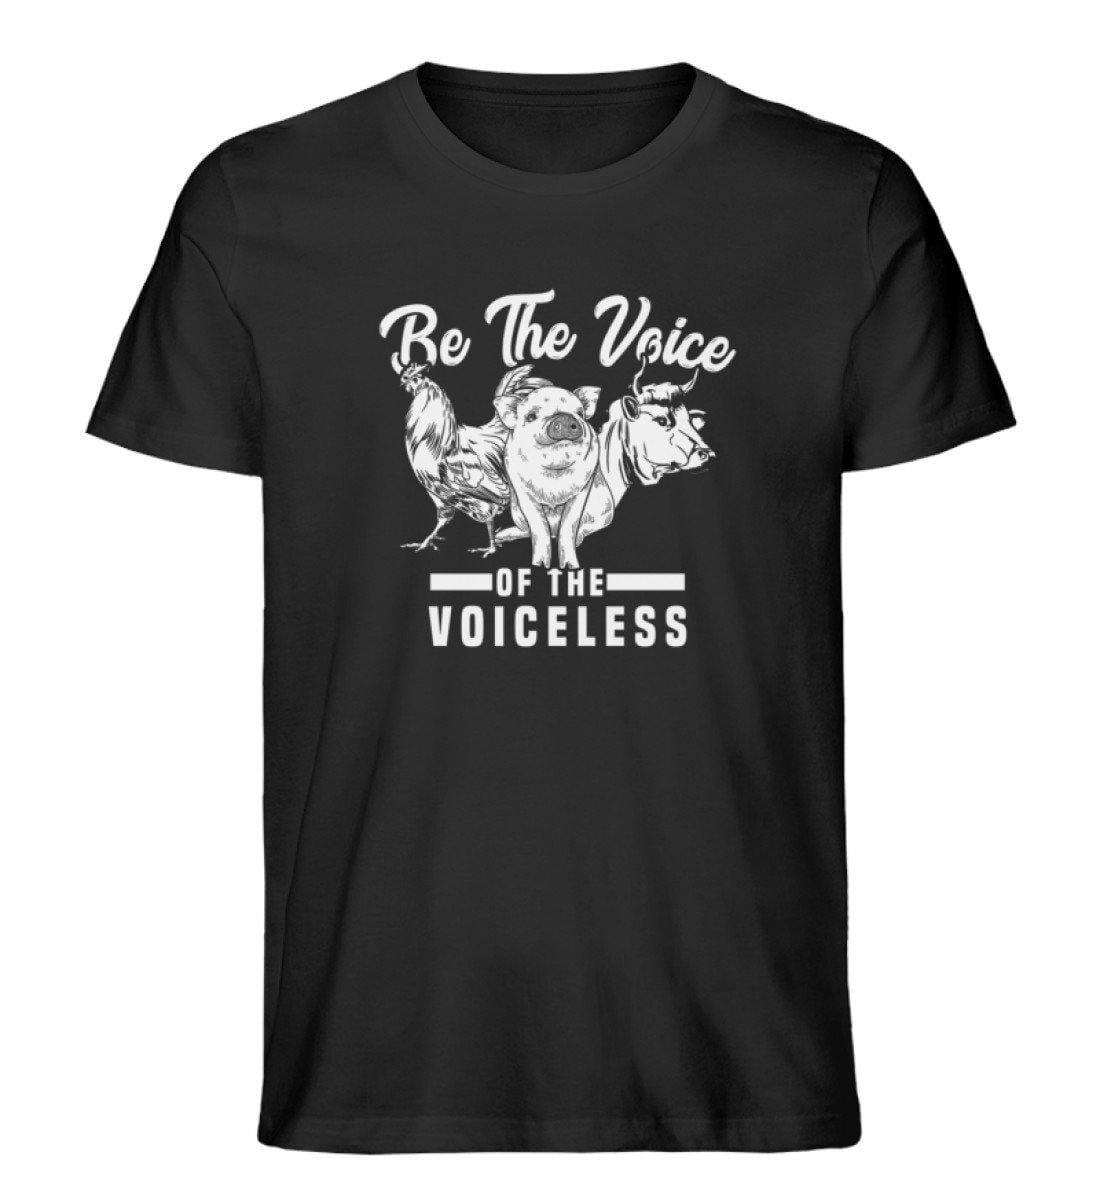 Be The Voice of the voiceless - Unisex Organic Shirt - Team Vegan © vegan t shirt